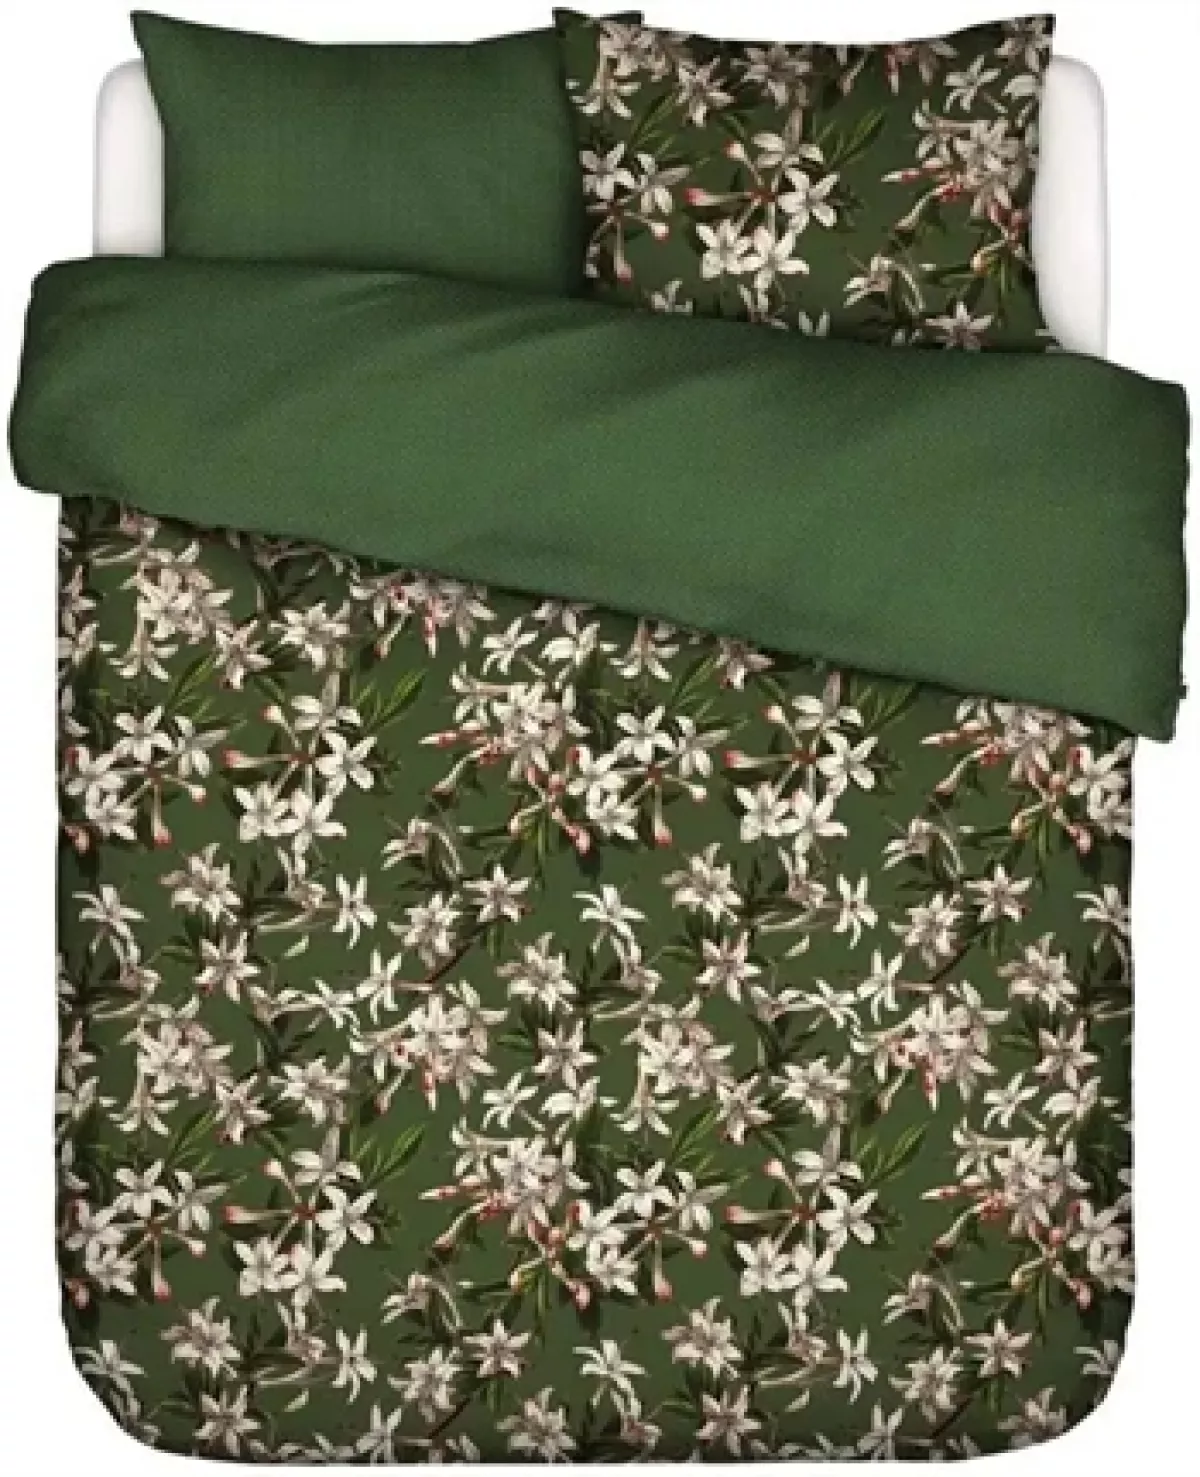 #3 - Dobbeltdyne sengetøj 200x200 cm - Verano green - Vendbar dobbeltdyne betræk - 100% bomuldssatin - Essenza sengetøj